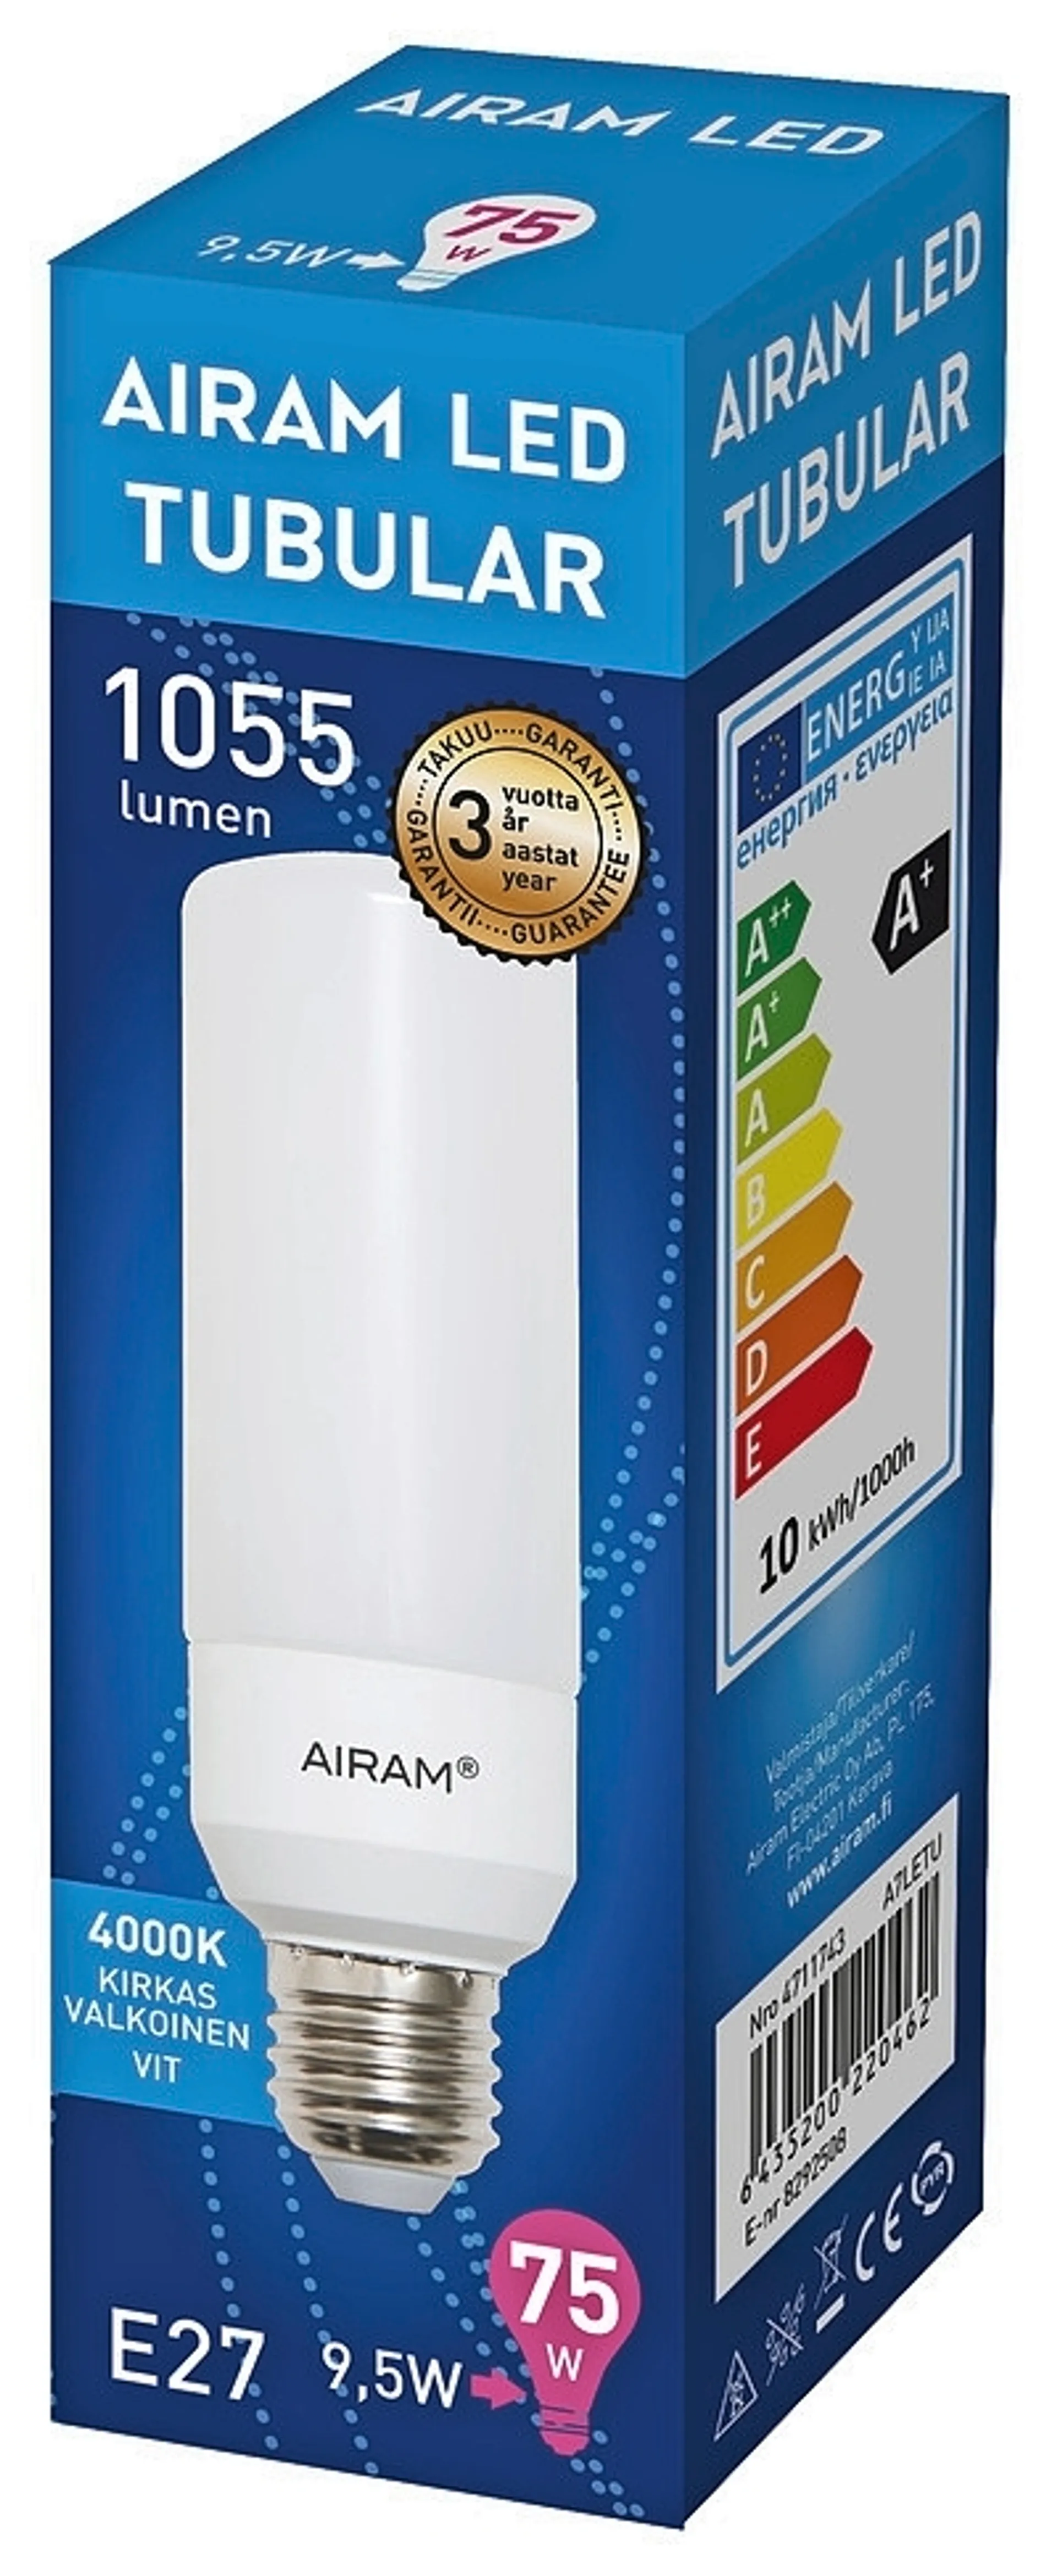 Airam LED 9,5w tubular lamppu E27 1055lm 4000k - 2